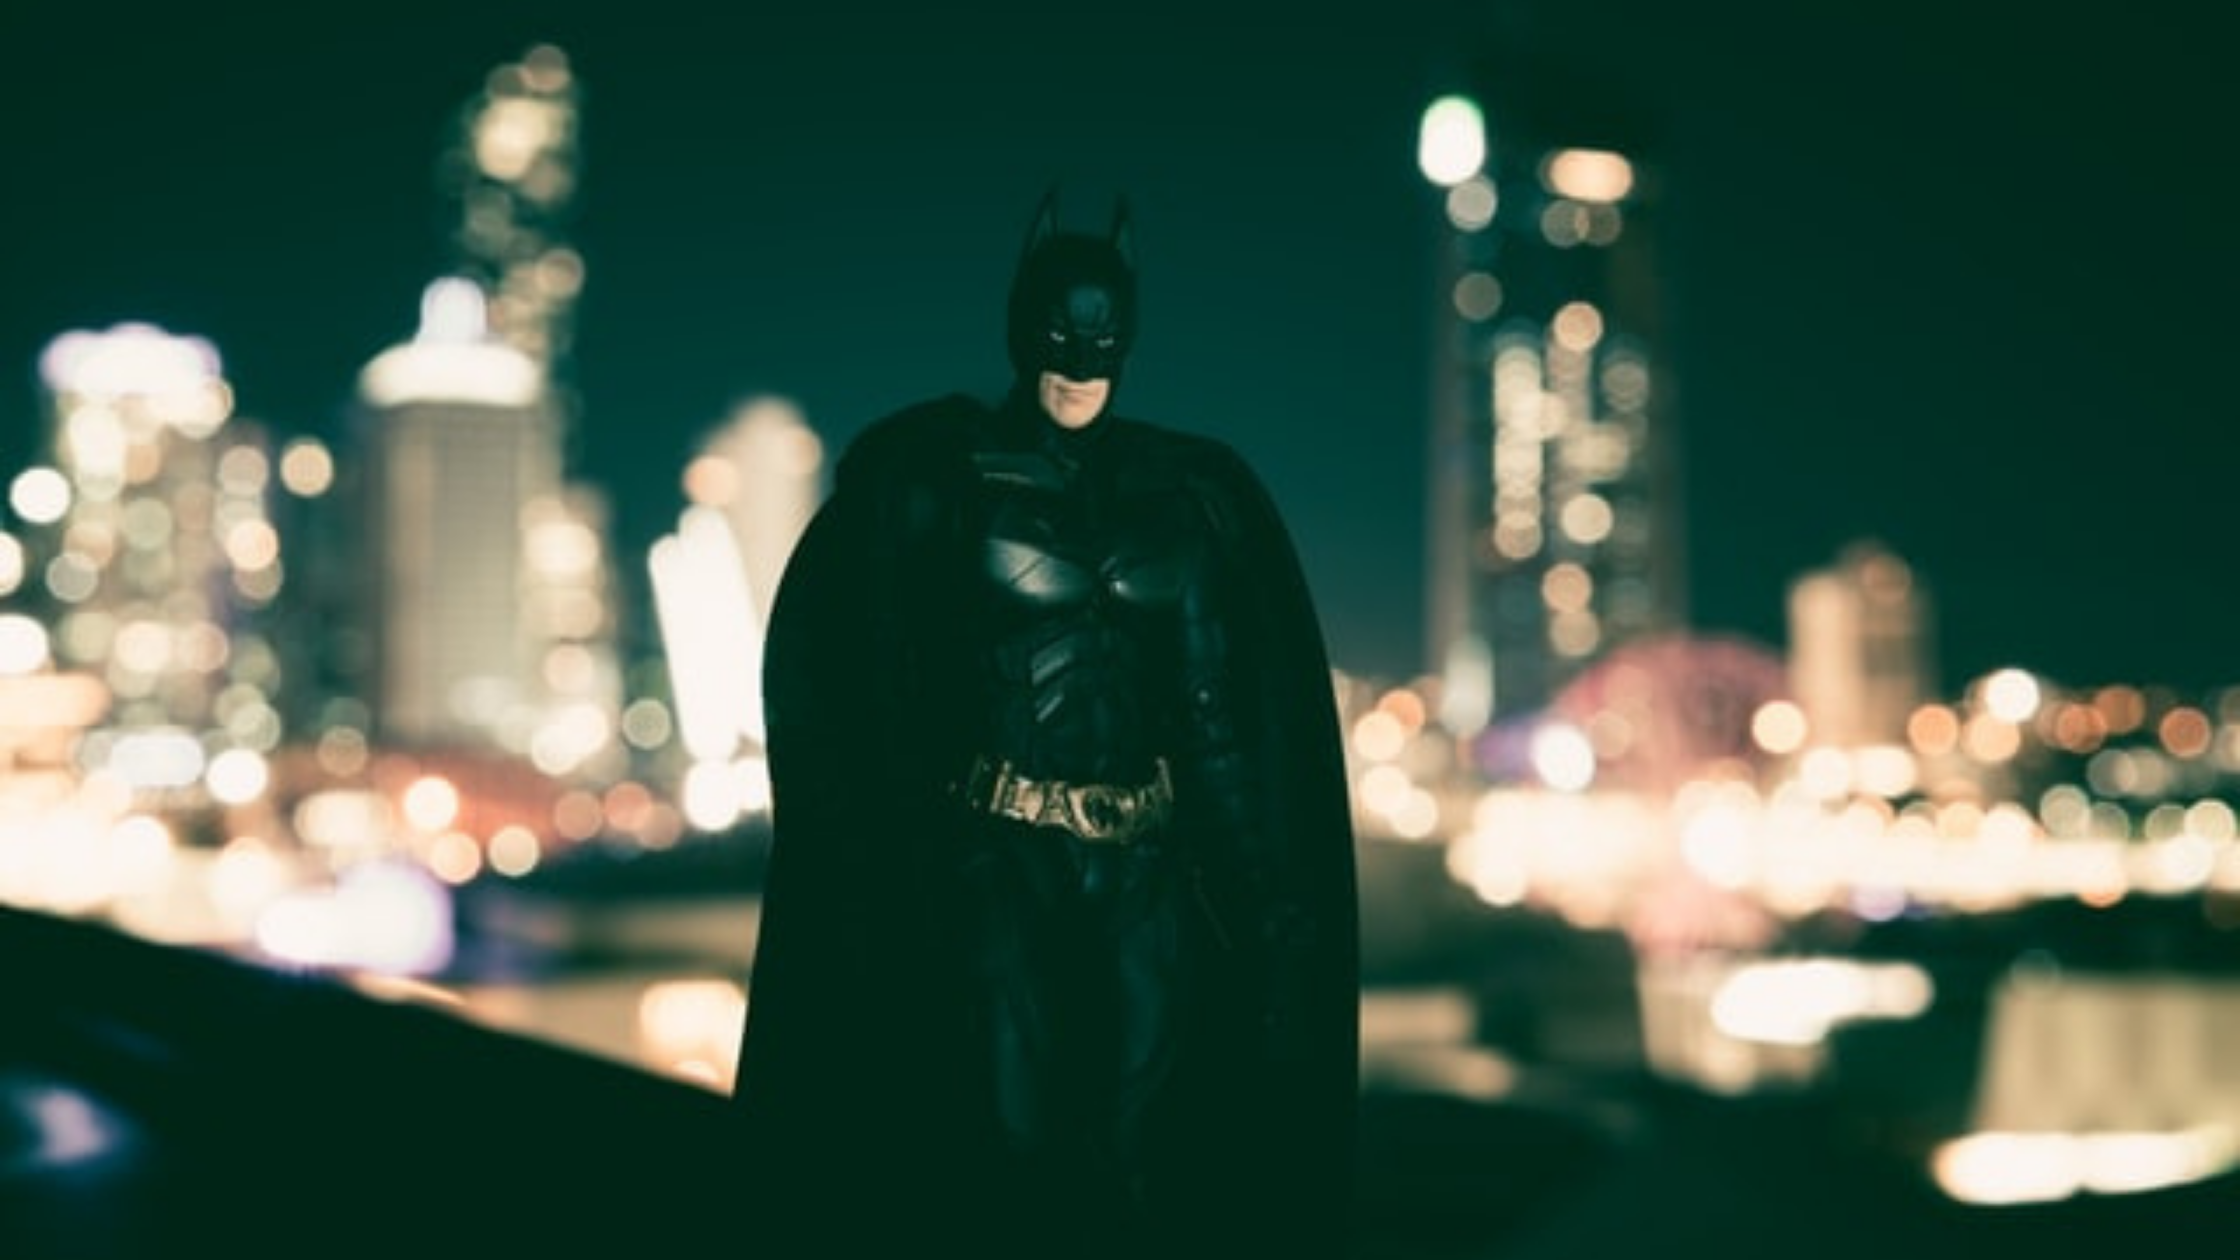 Batman in the city